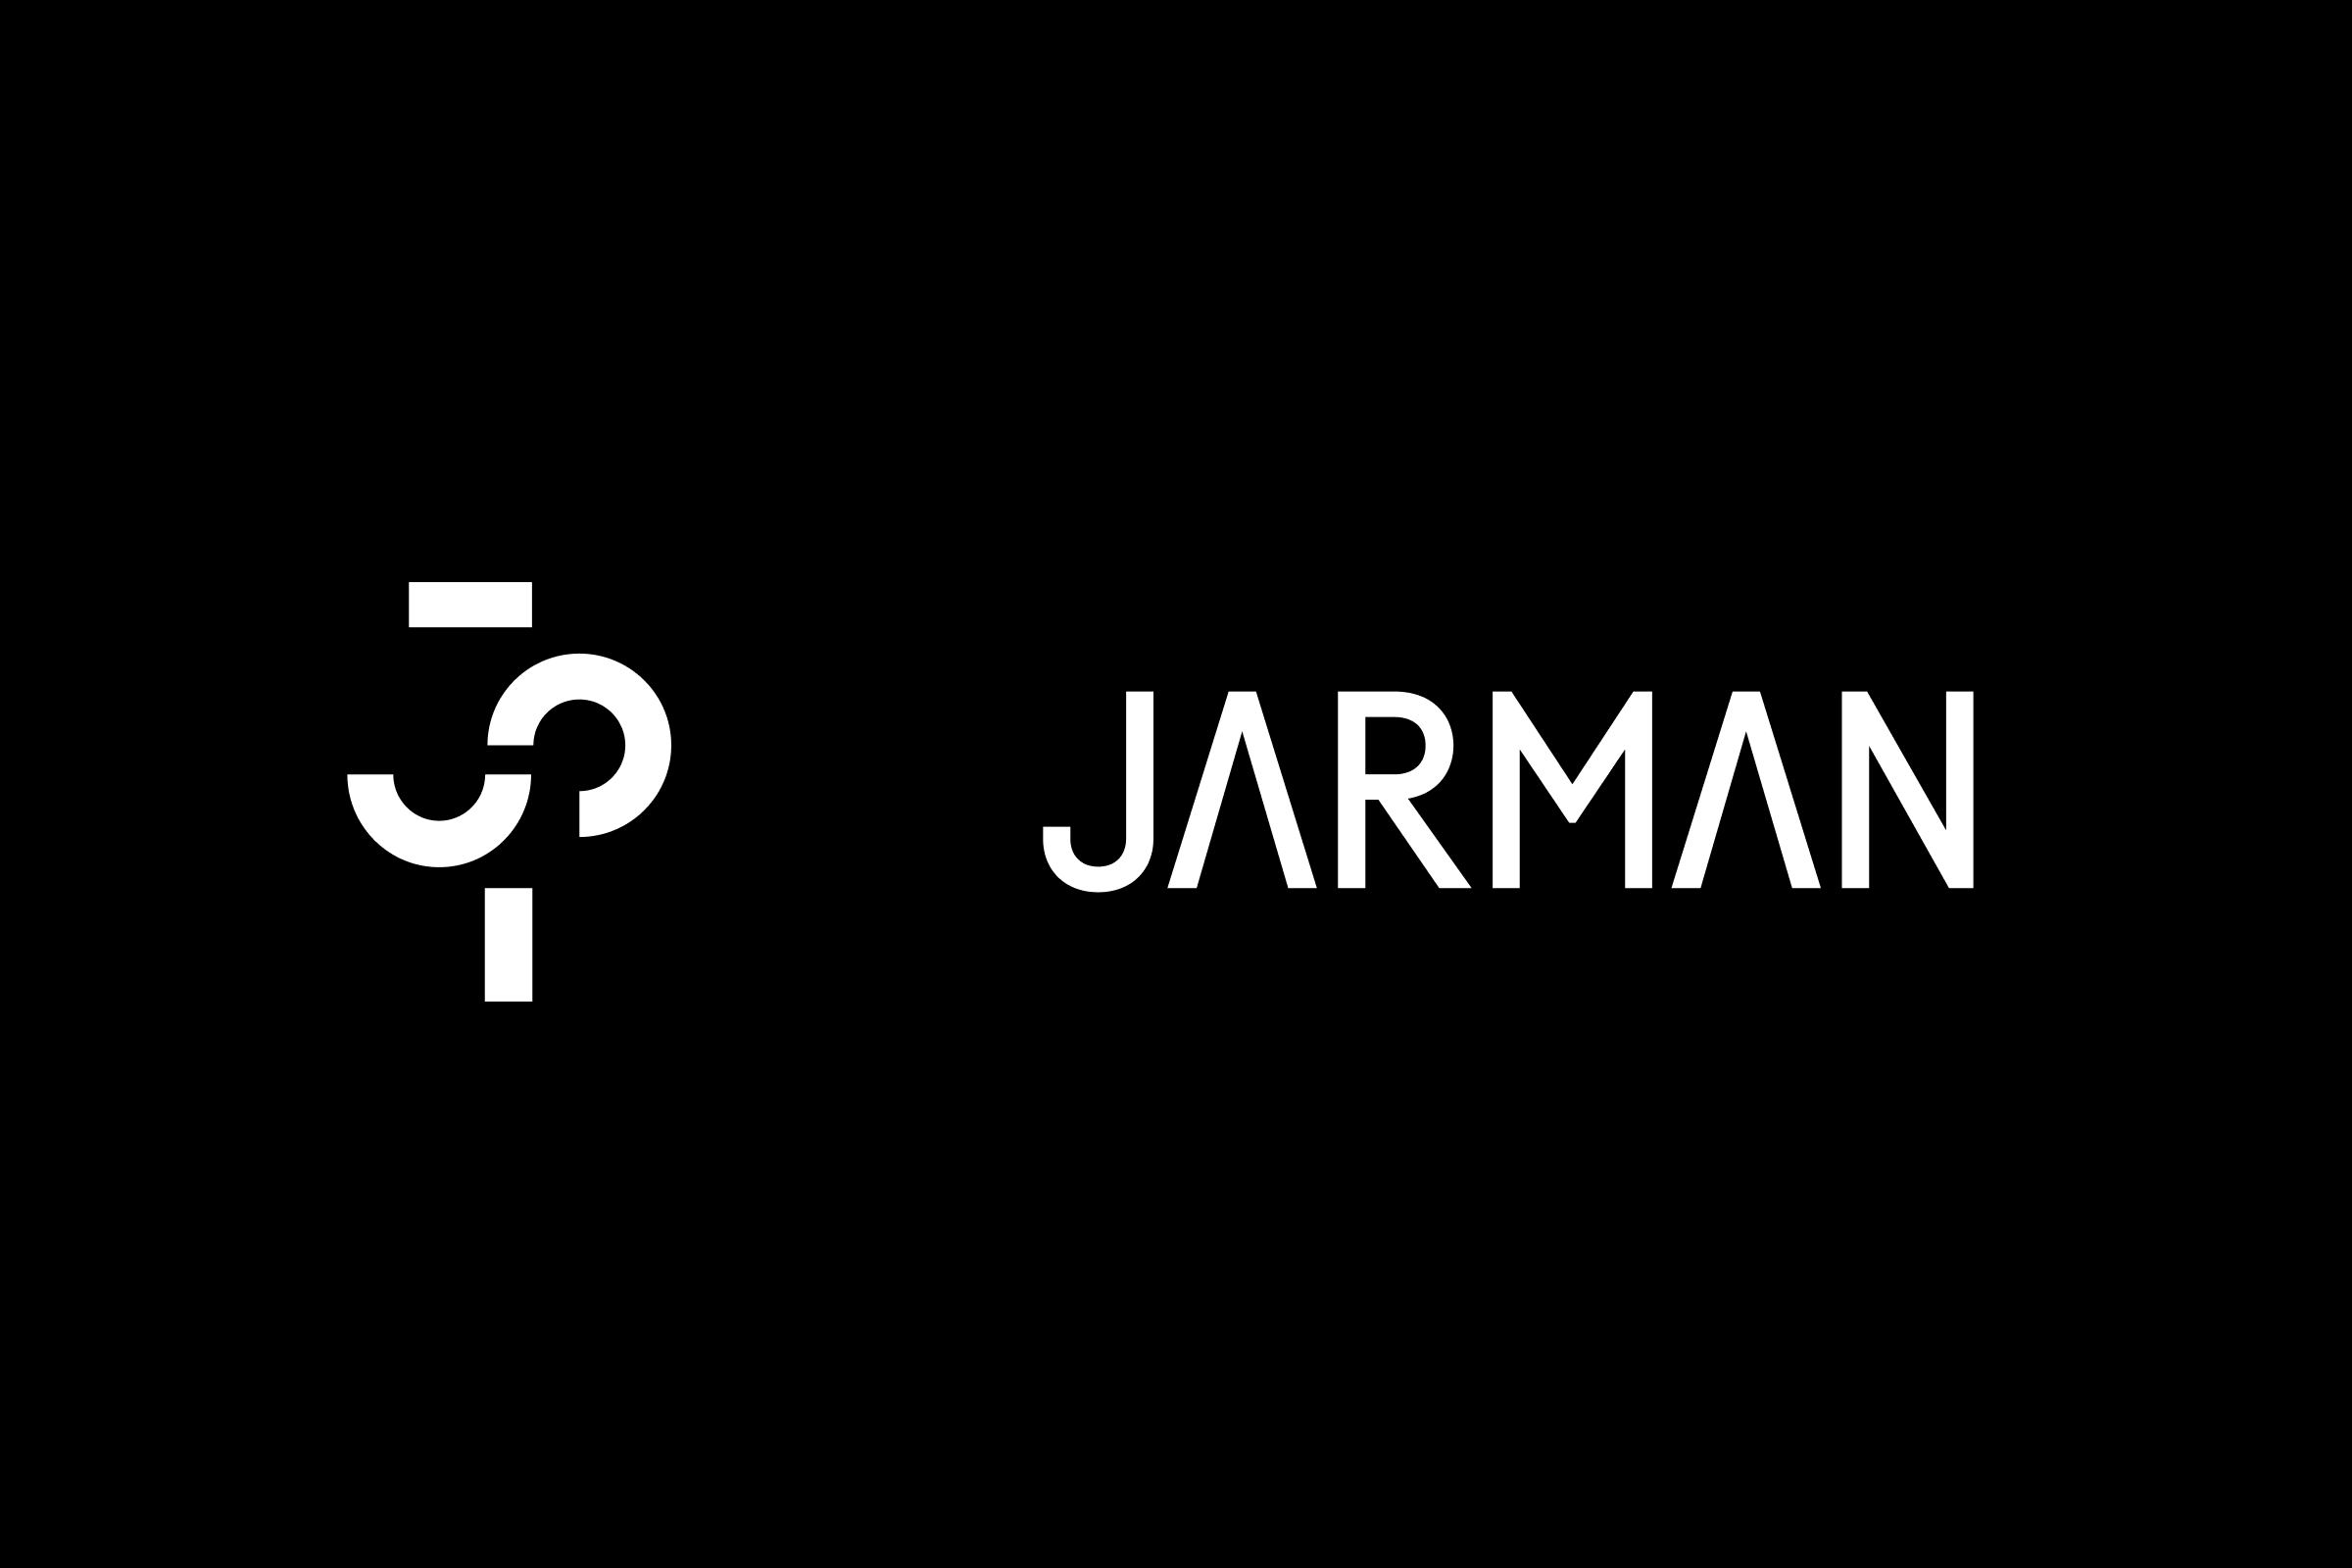 simon-p-coyle-branding-logo-design-2019-jarman-professional